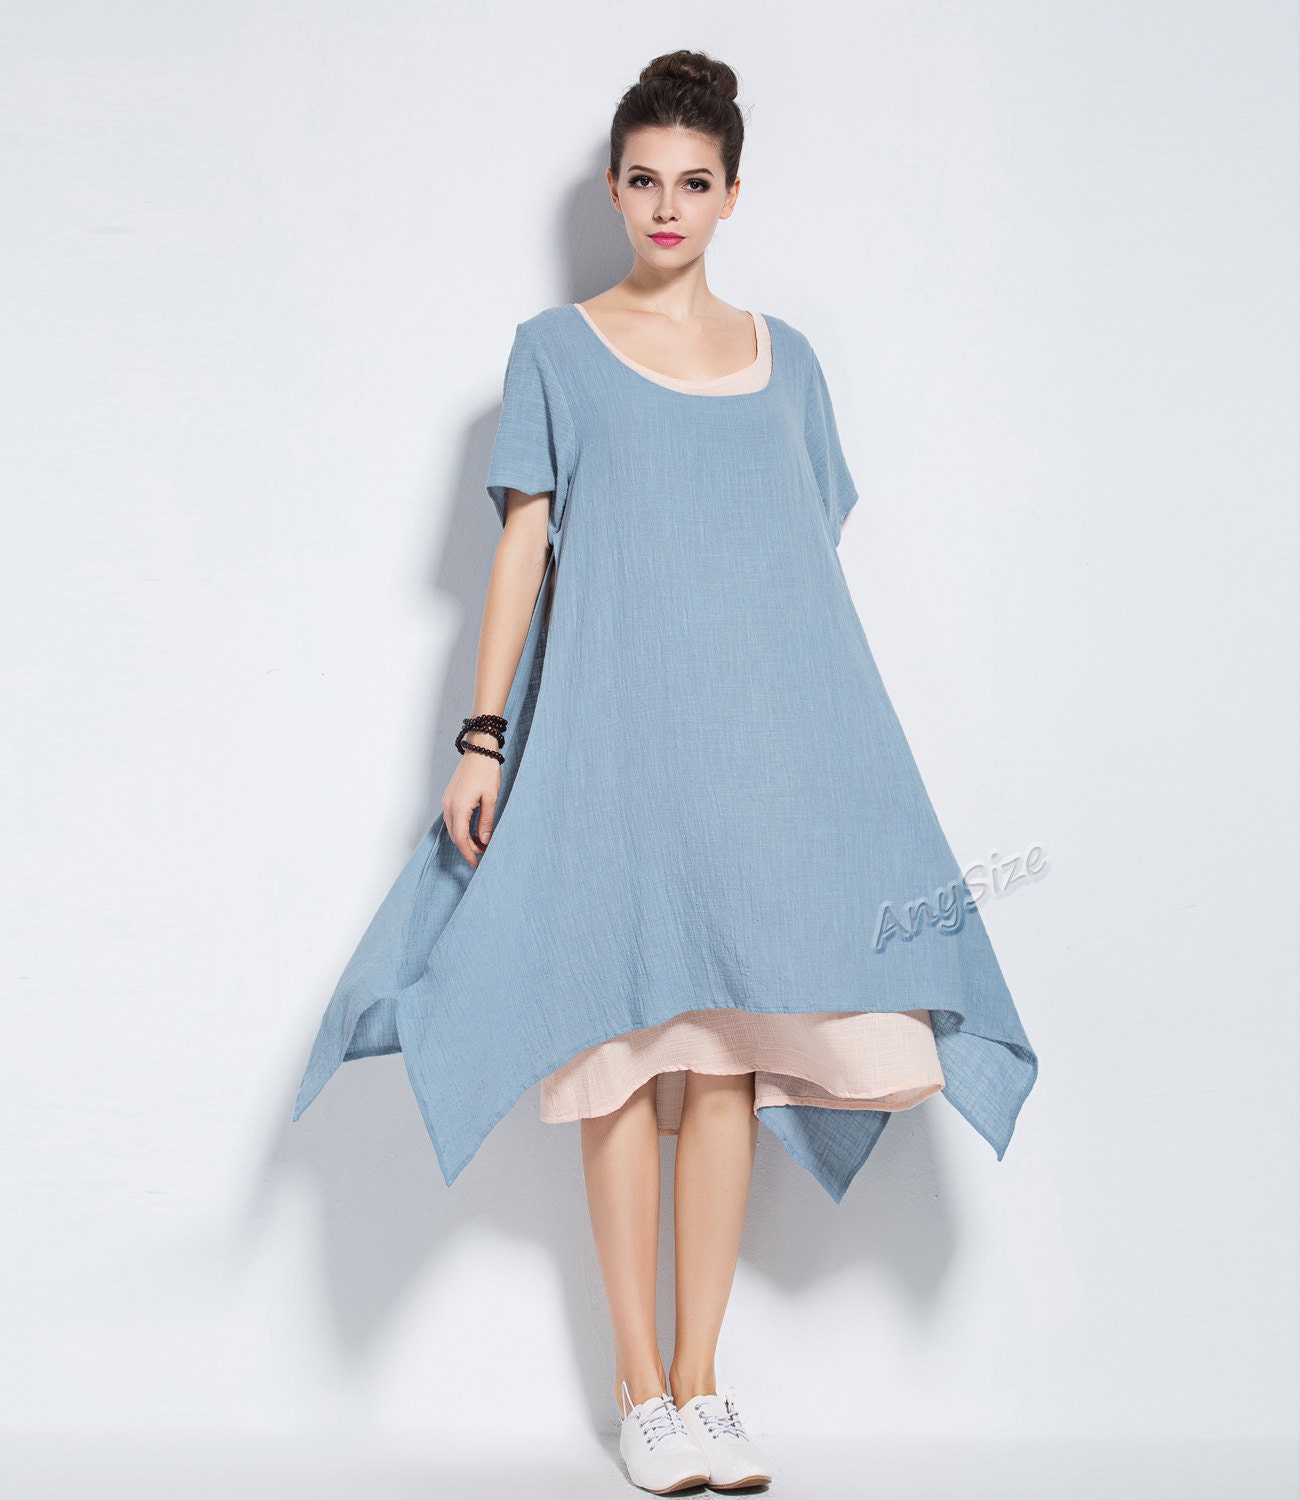 Anysize New Version fake two piece soft linen&cotton dress | Etsy